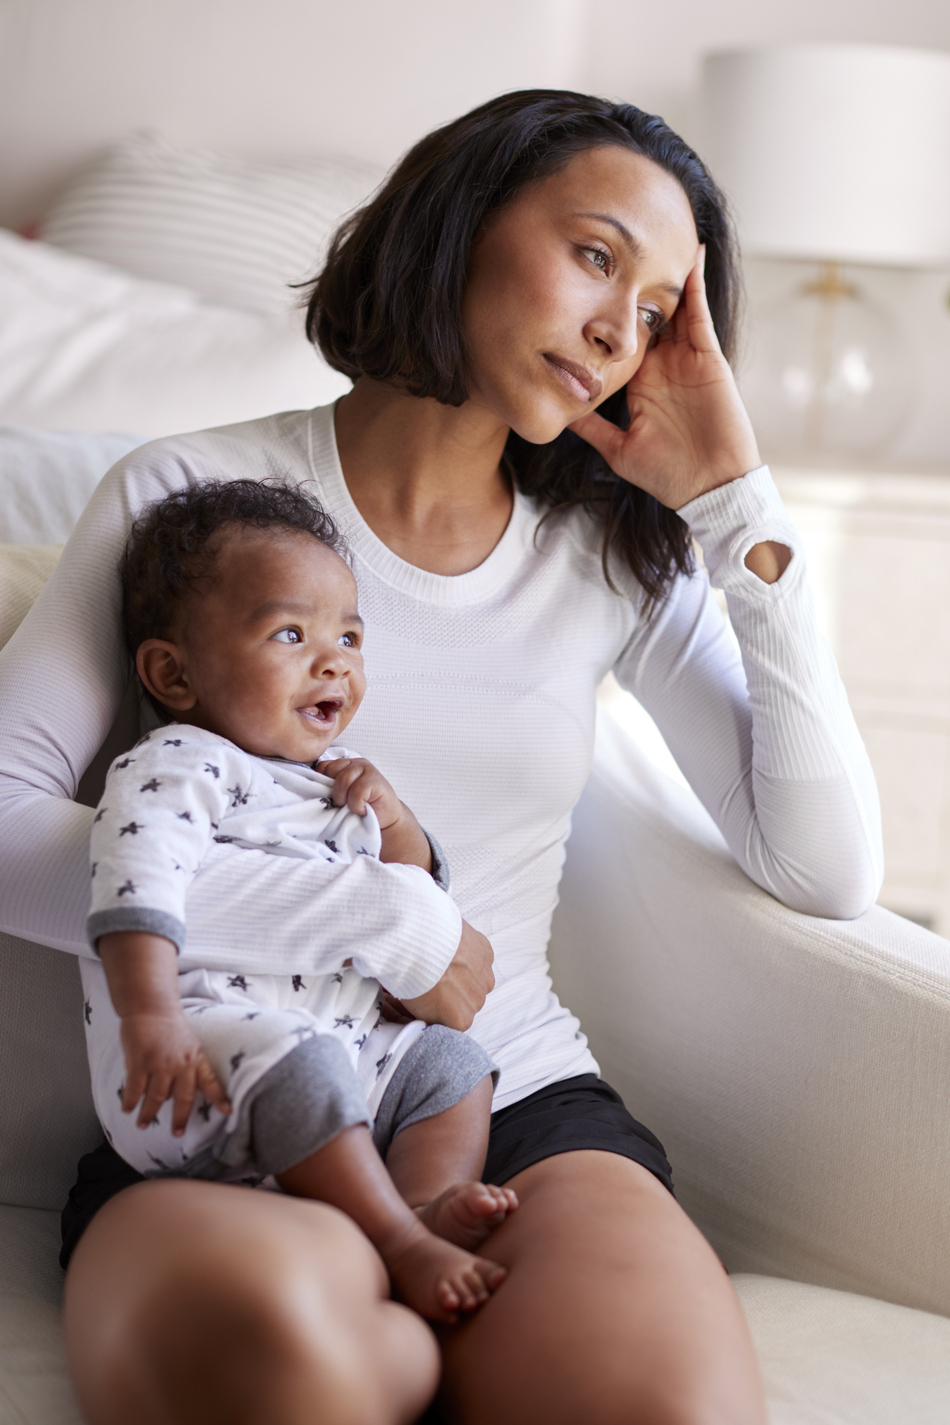 FDA Approves New Treatment for Postpartum Depression